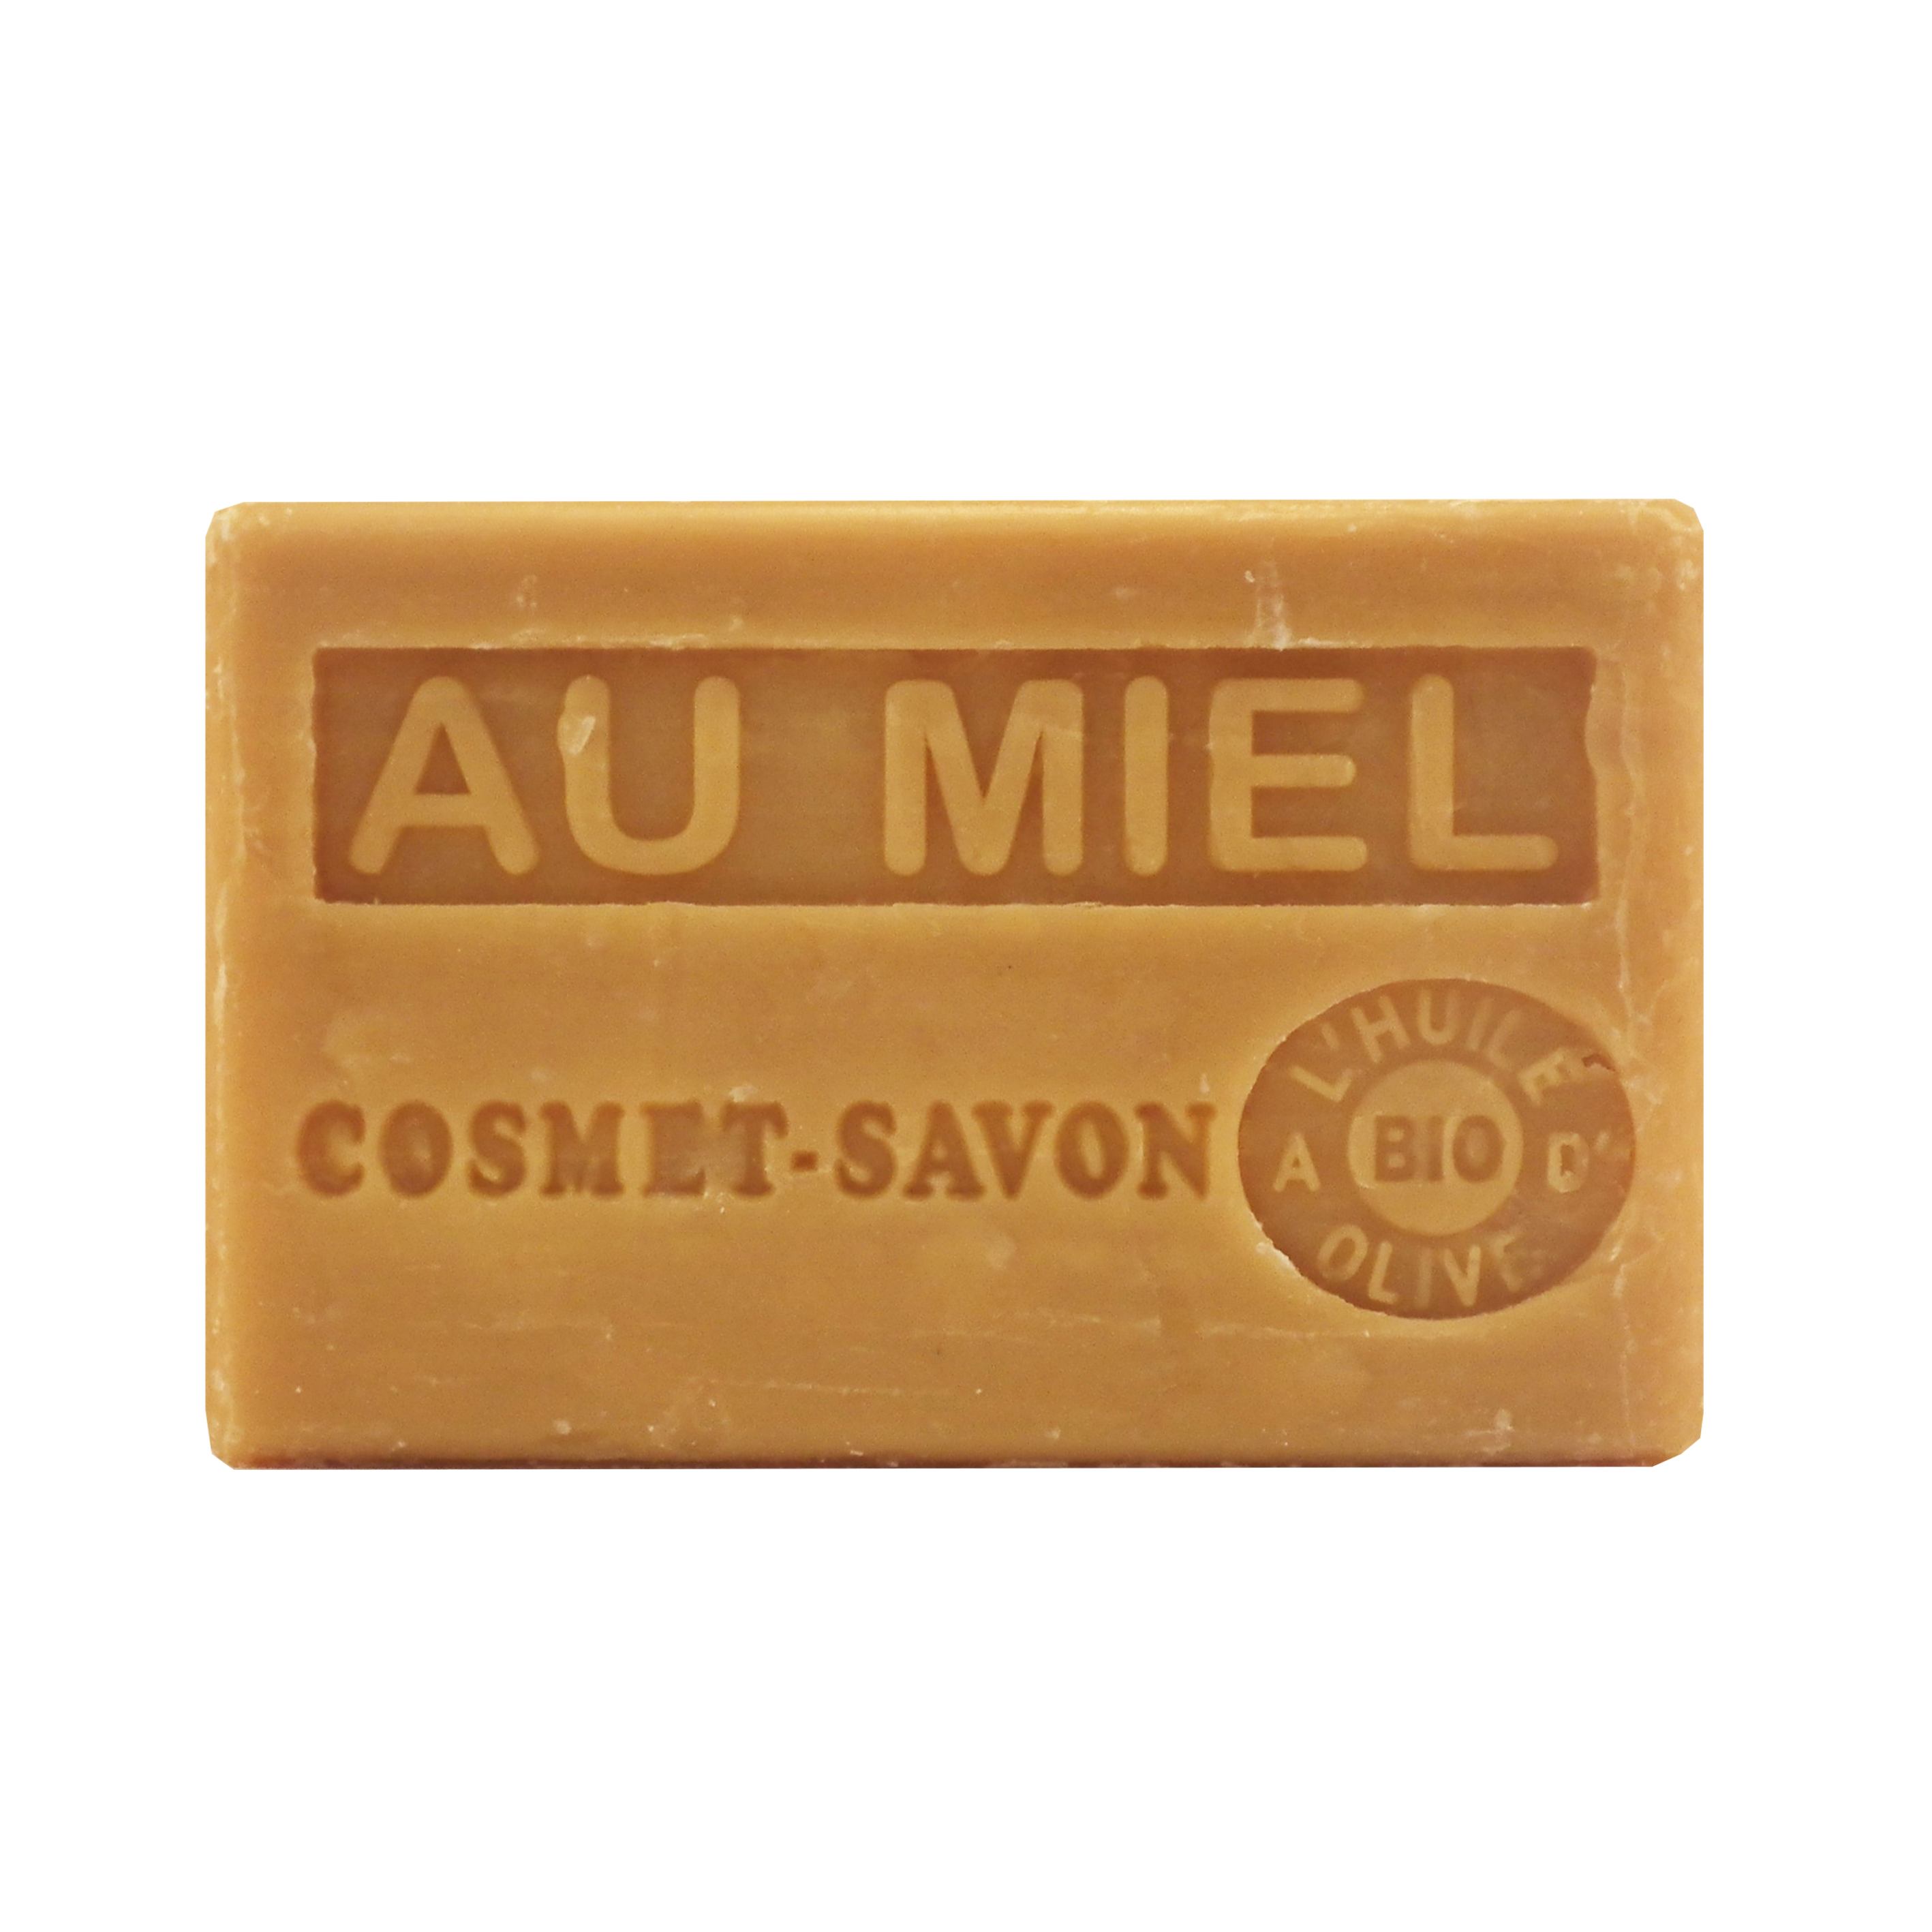 miel-savon-125gr-au-beurre-de-karite-bio-cosmet-savon-3665205006522-face-JPEG